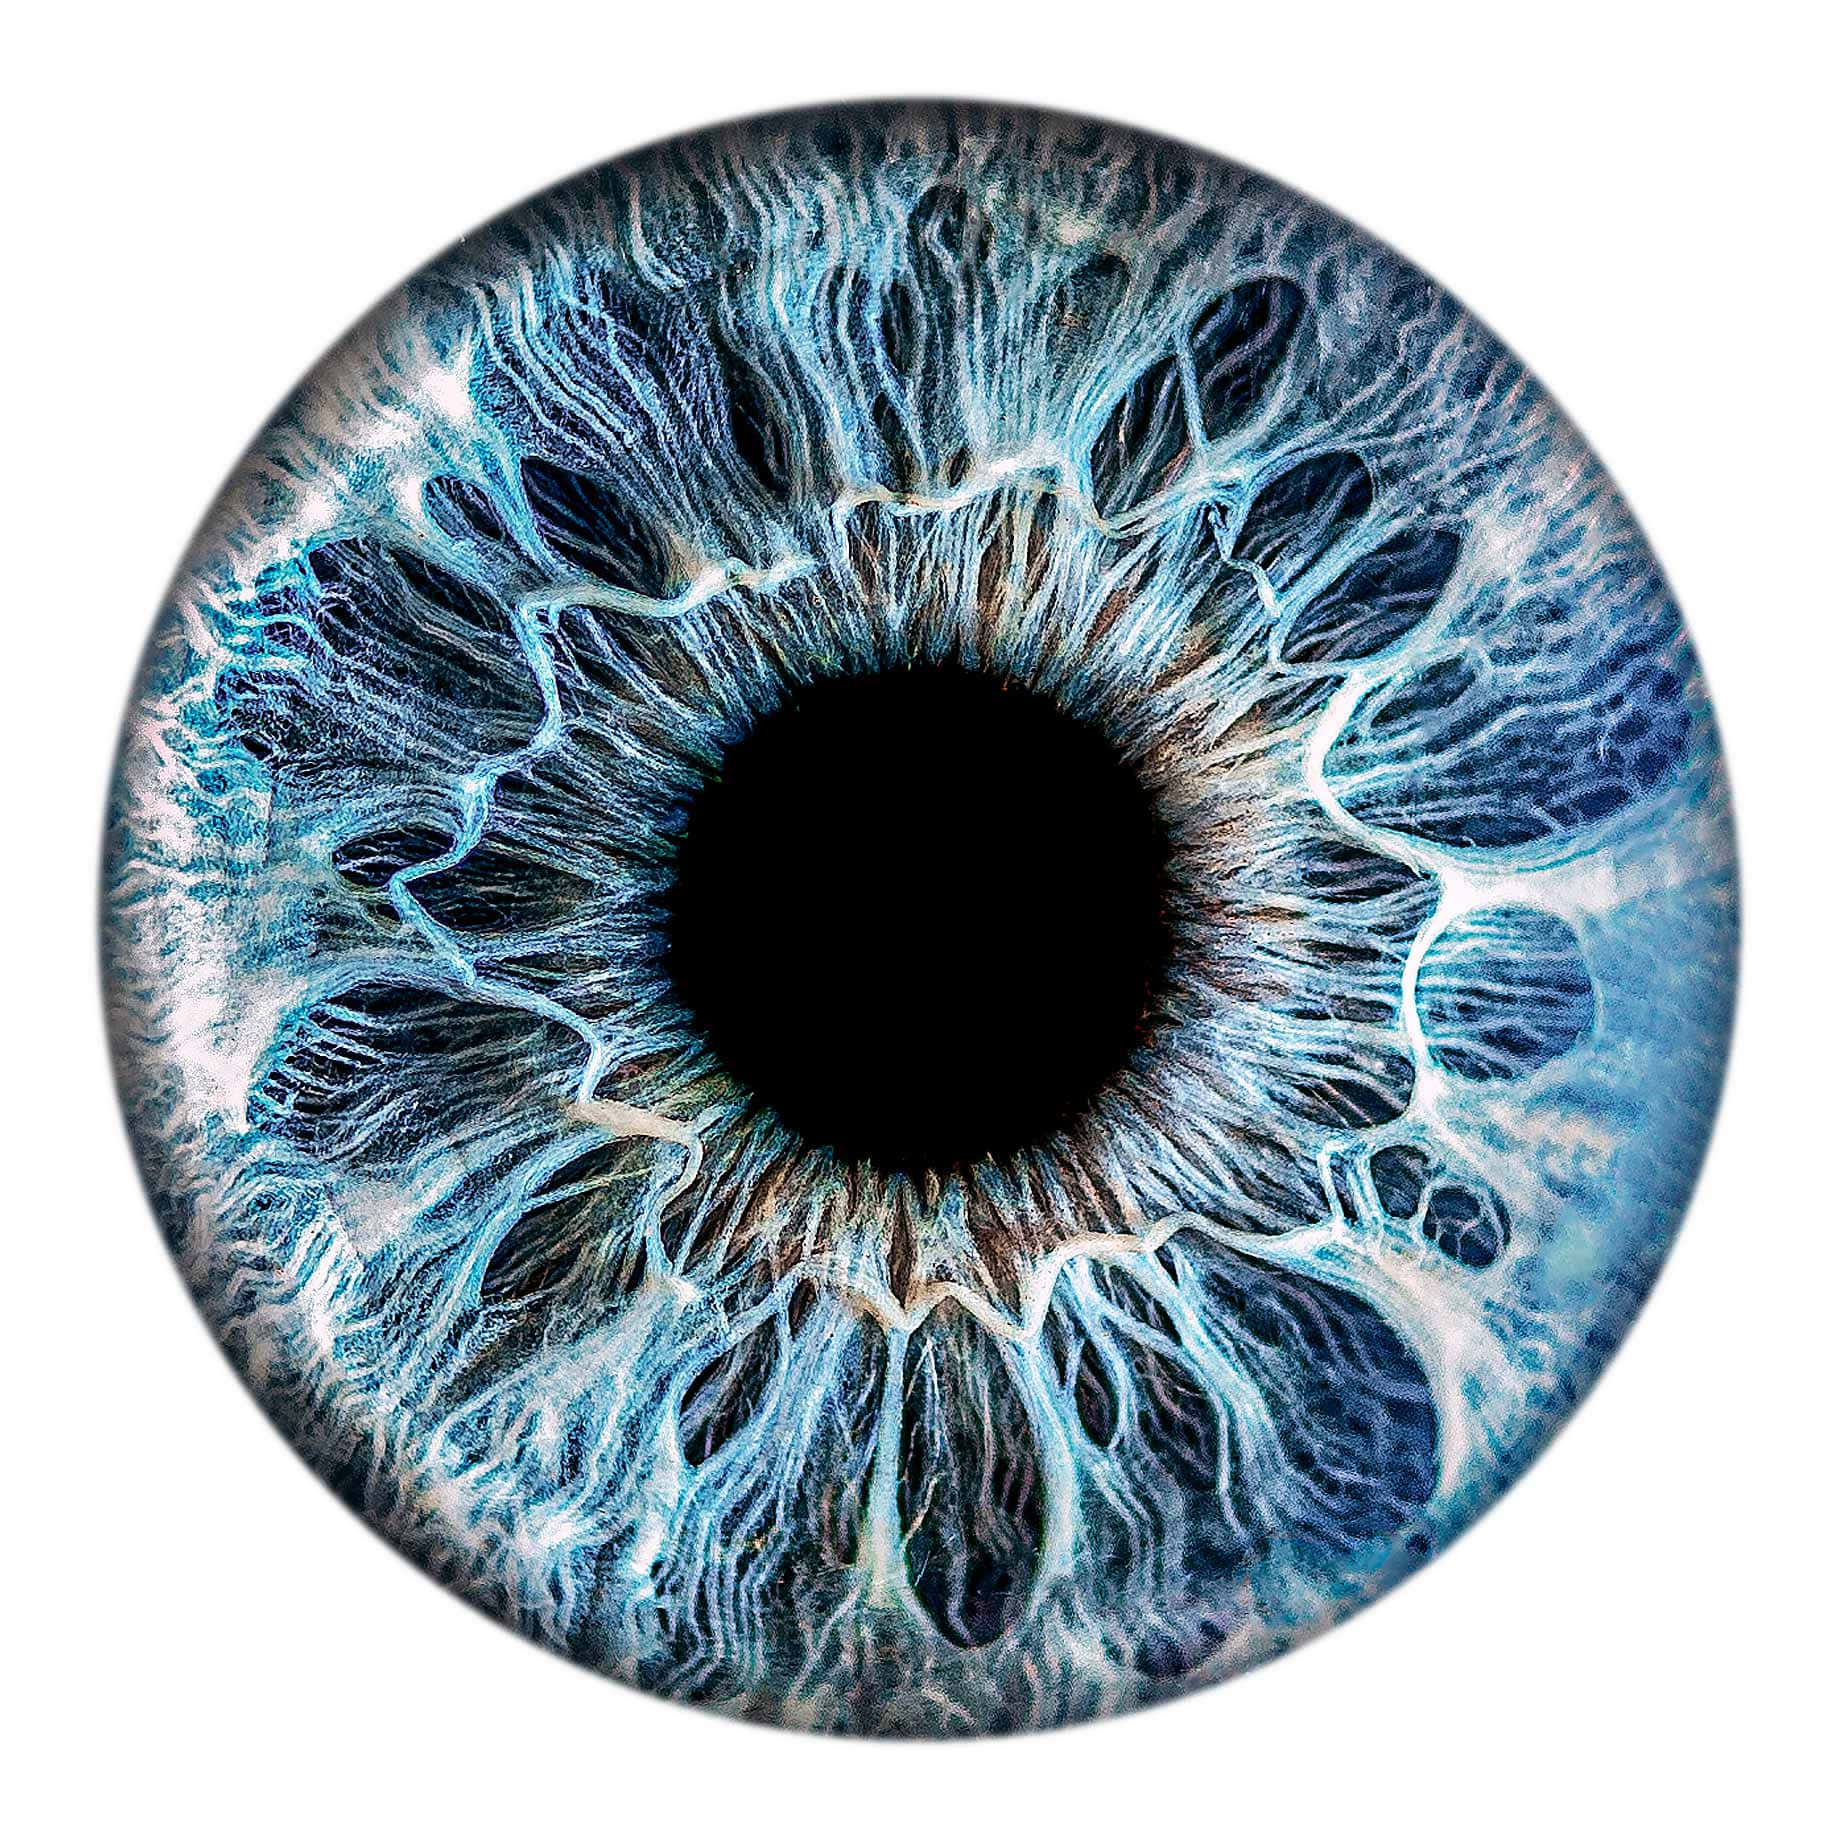 A Close Up Of A Blue Eye